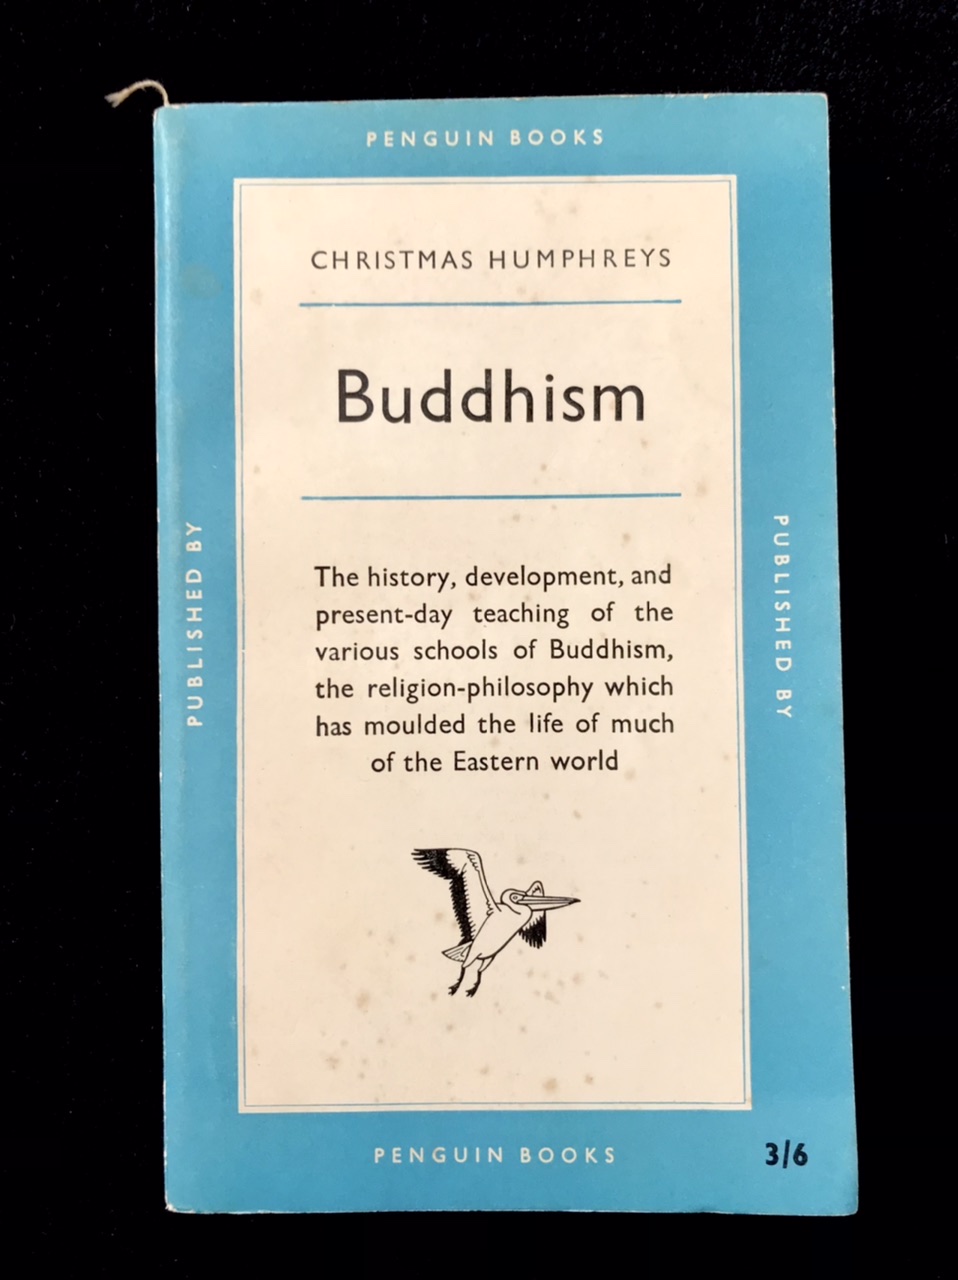 Buddhism by Christmas Humphreys